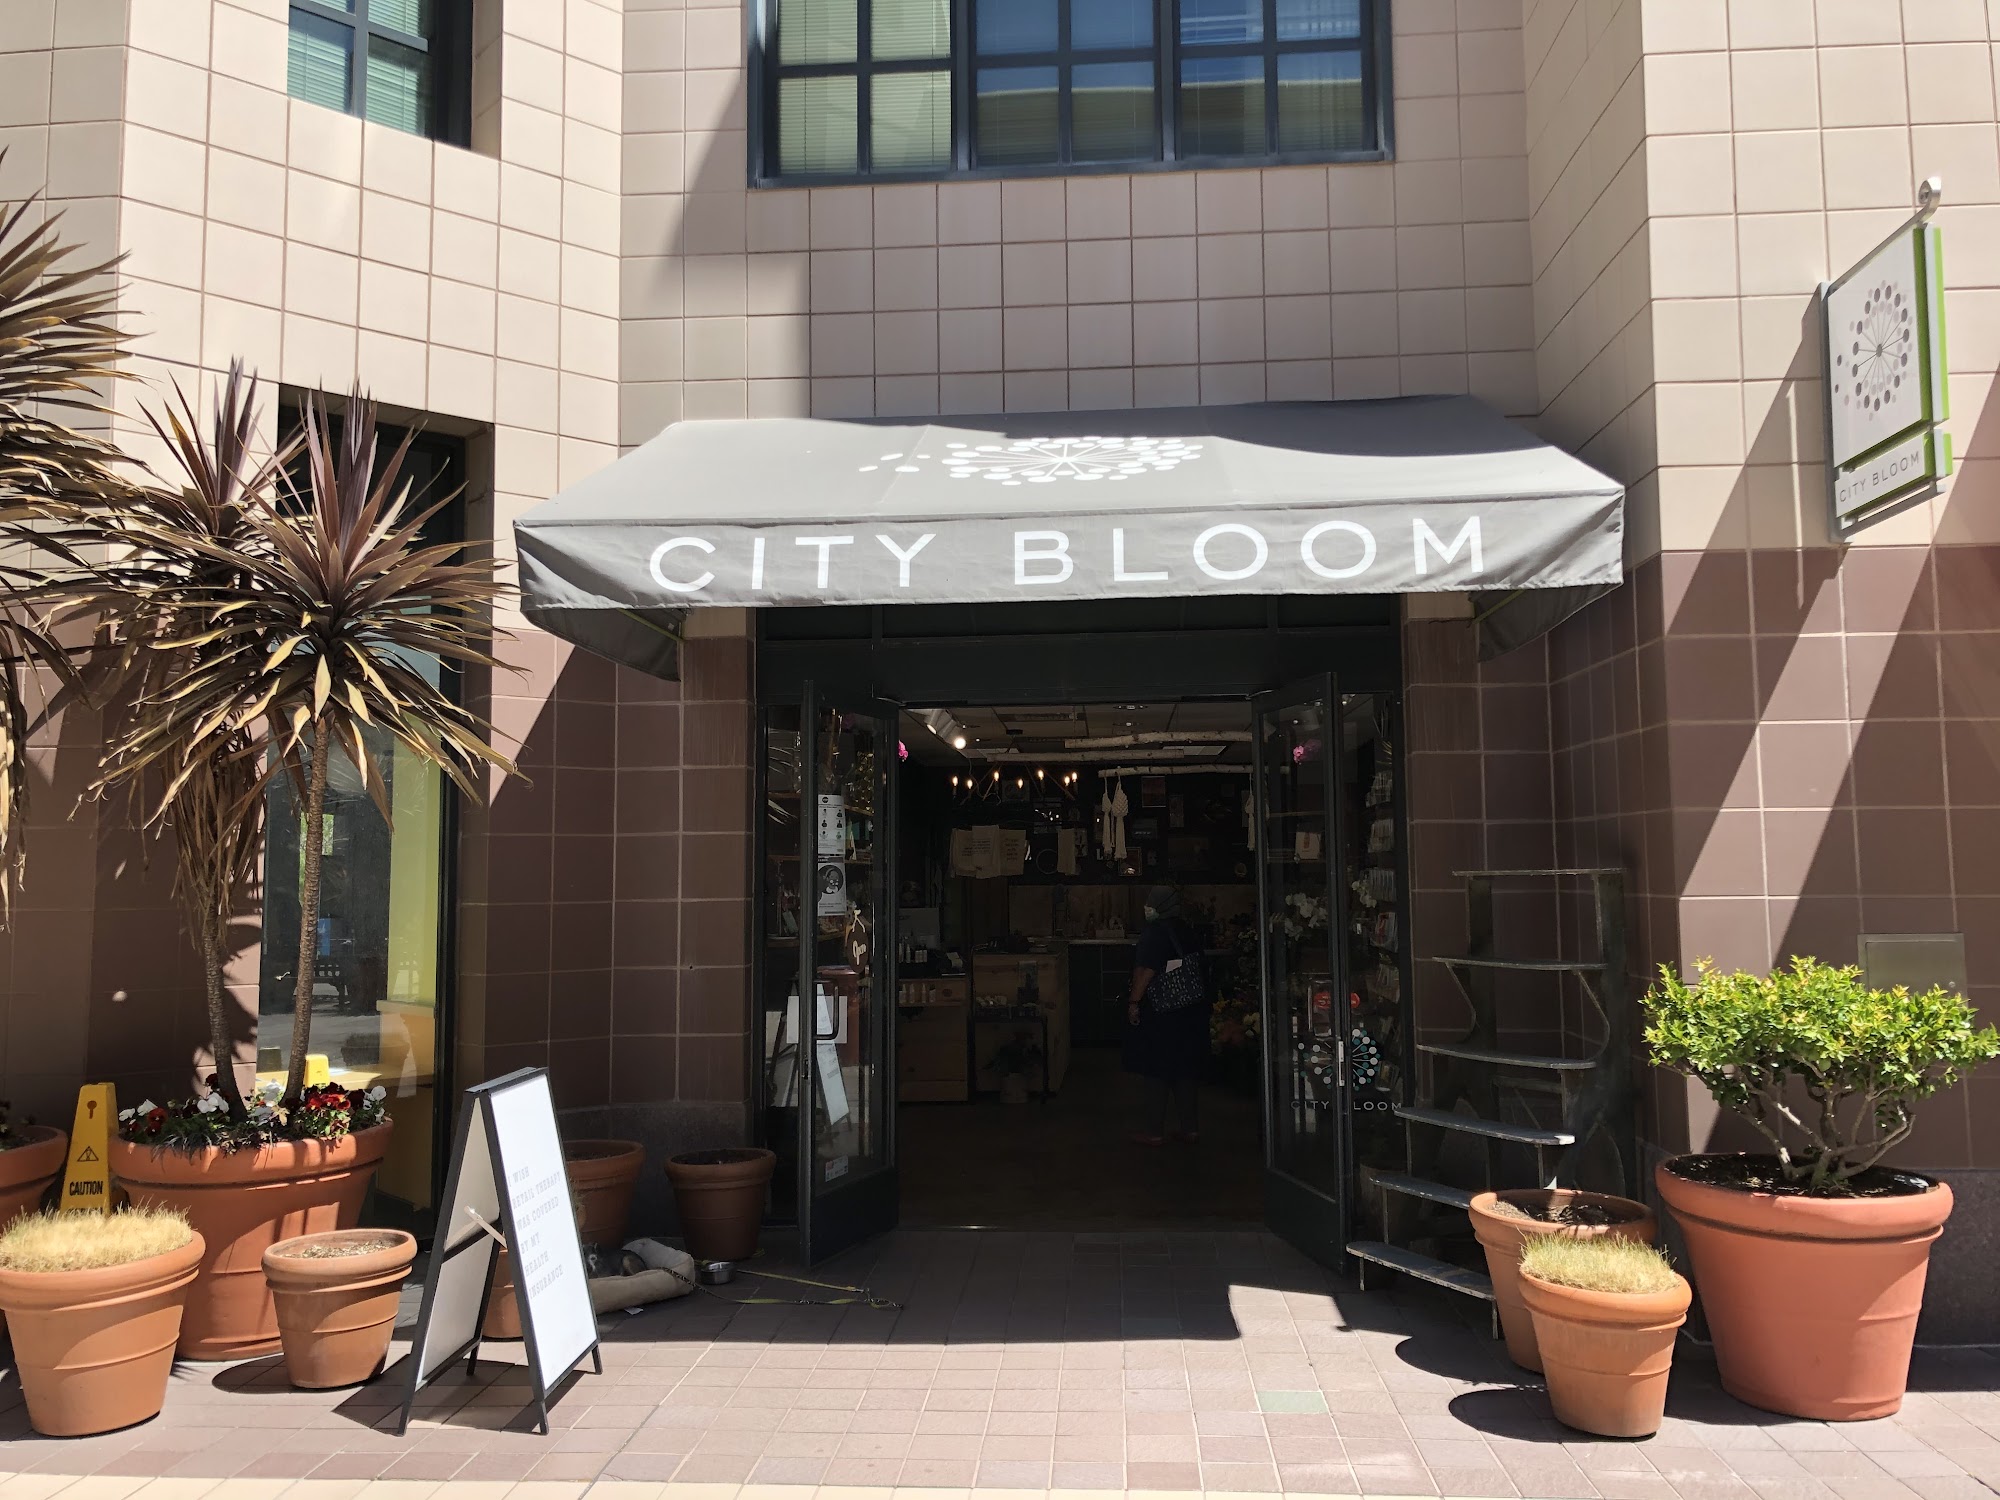 City Bloom, Inc